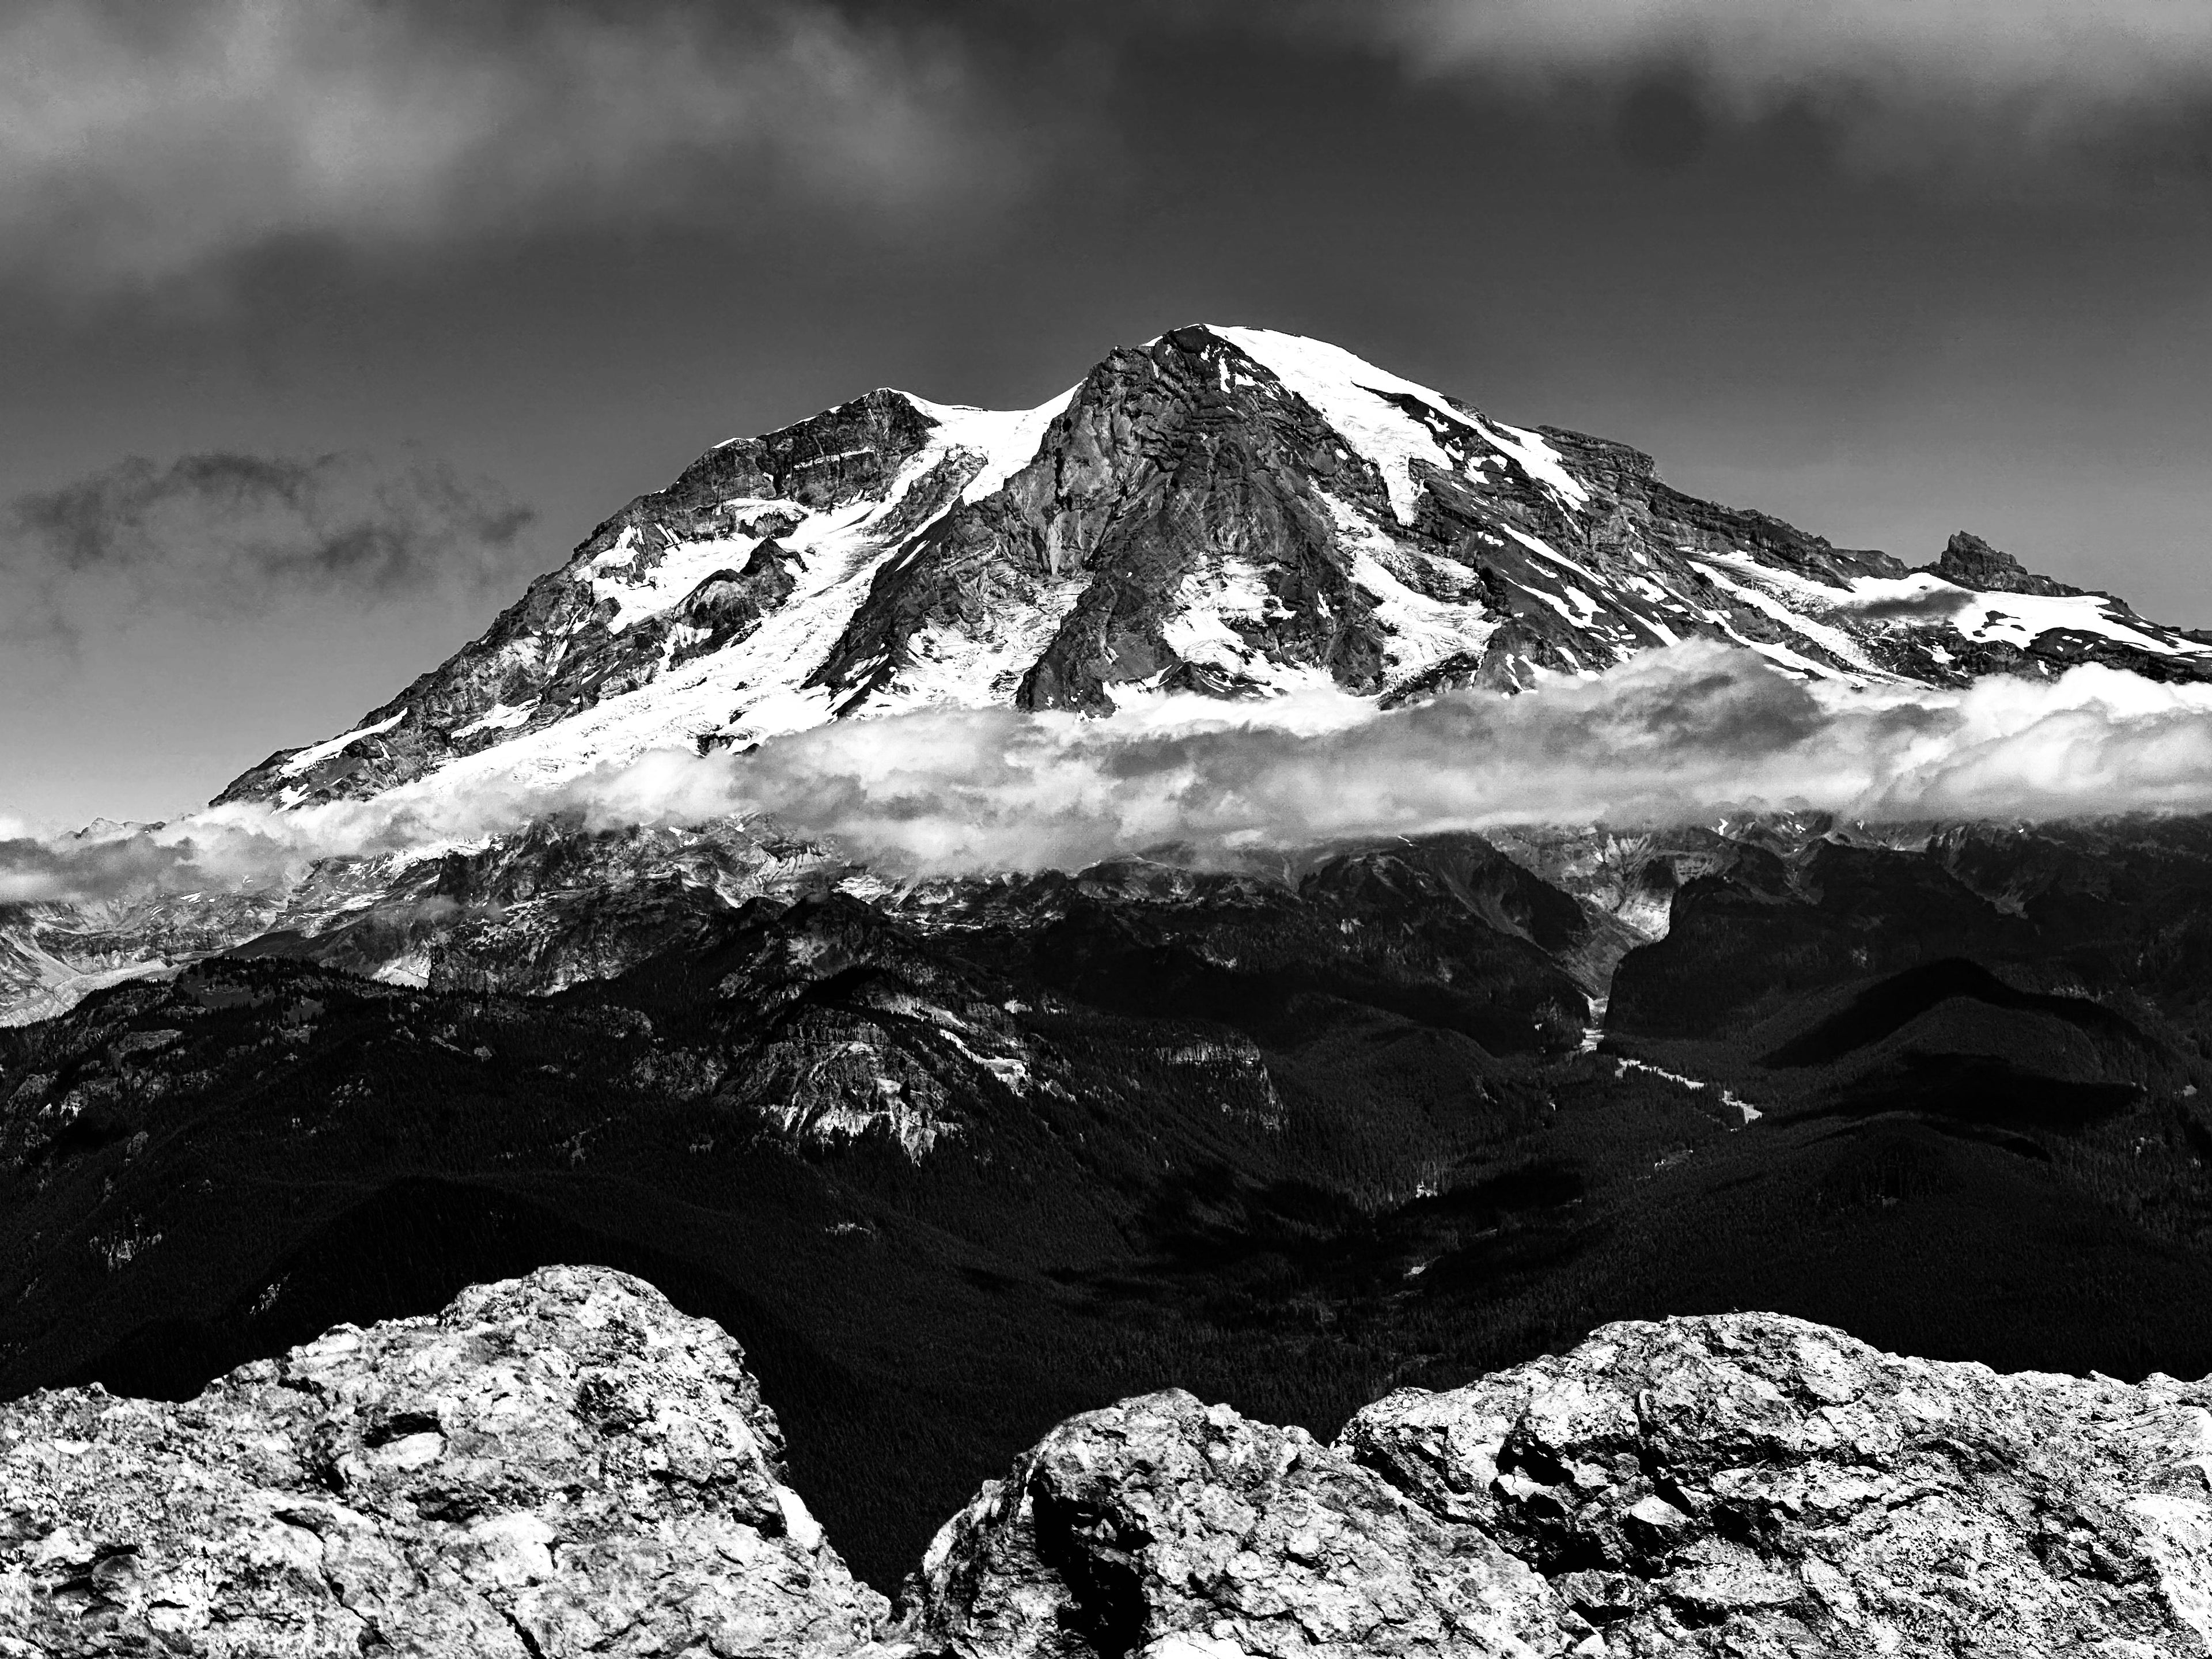 Black and white image of Mt.Rainier